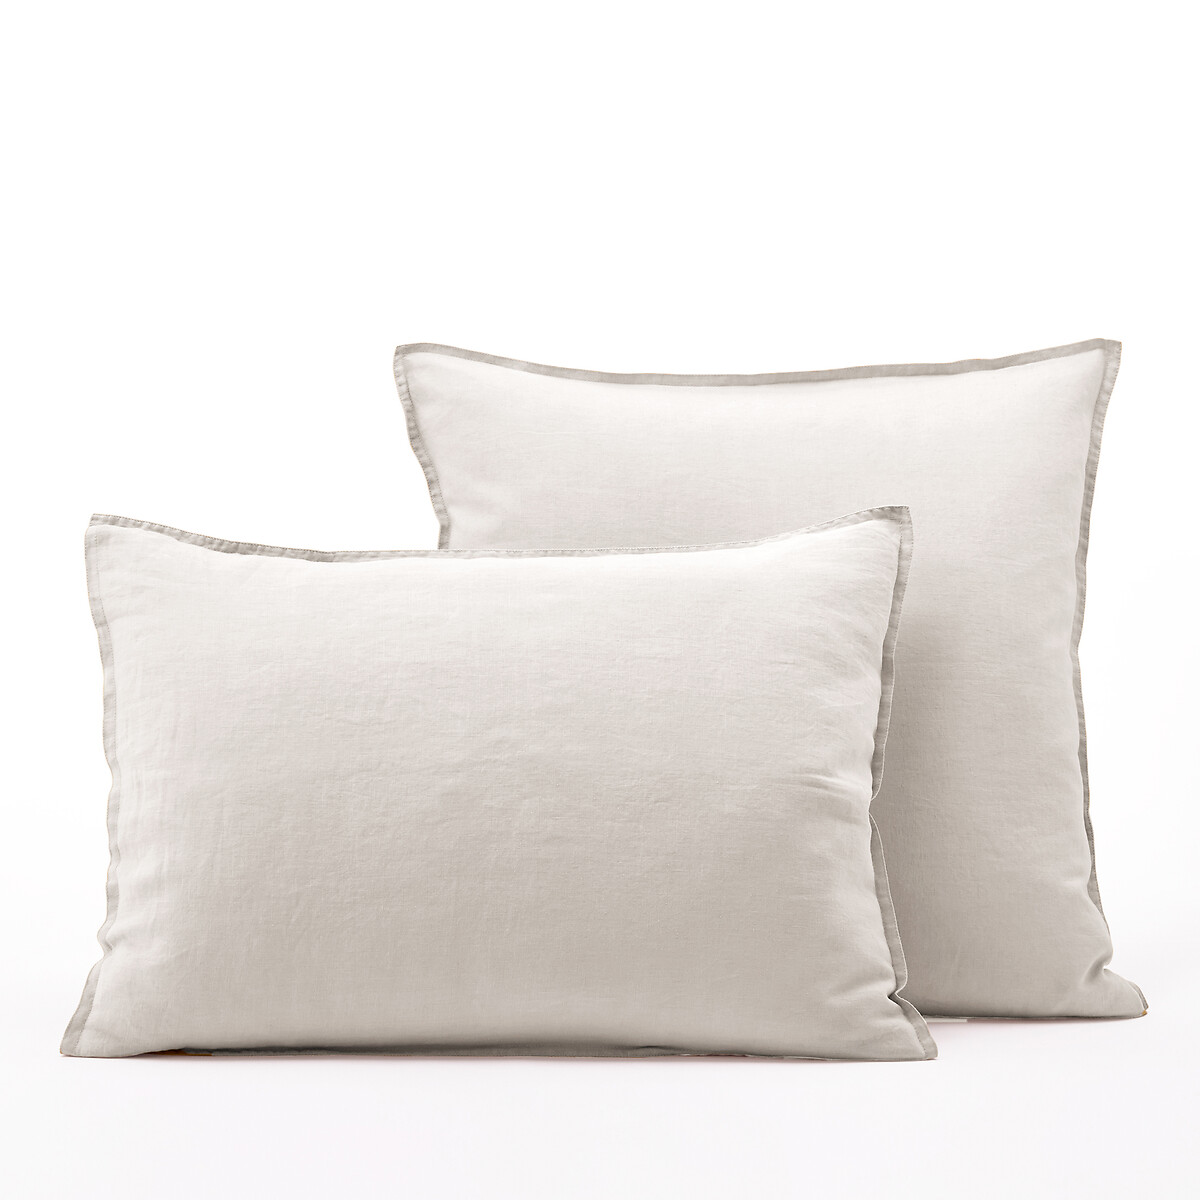 Happylin 100% Washed European Linen Pillowcase